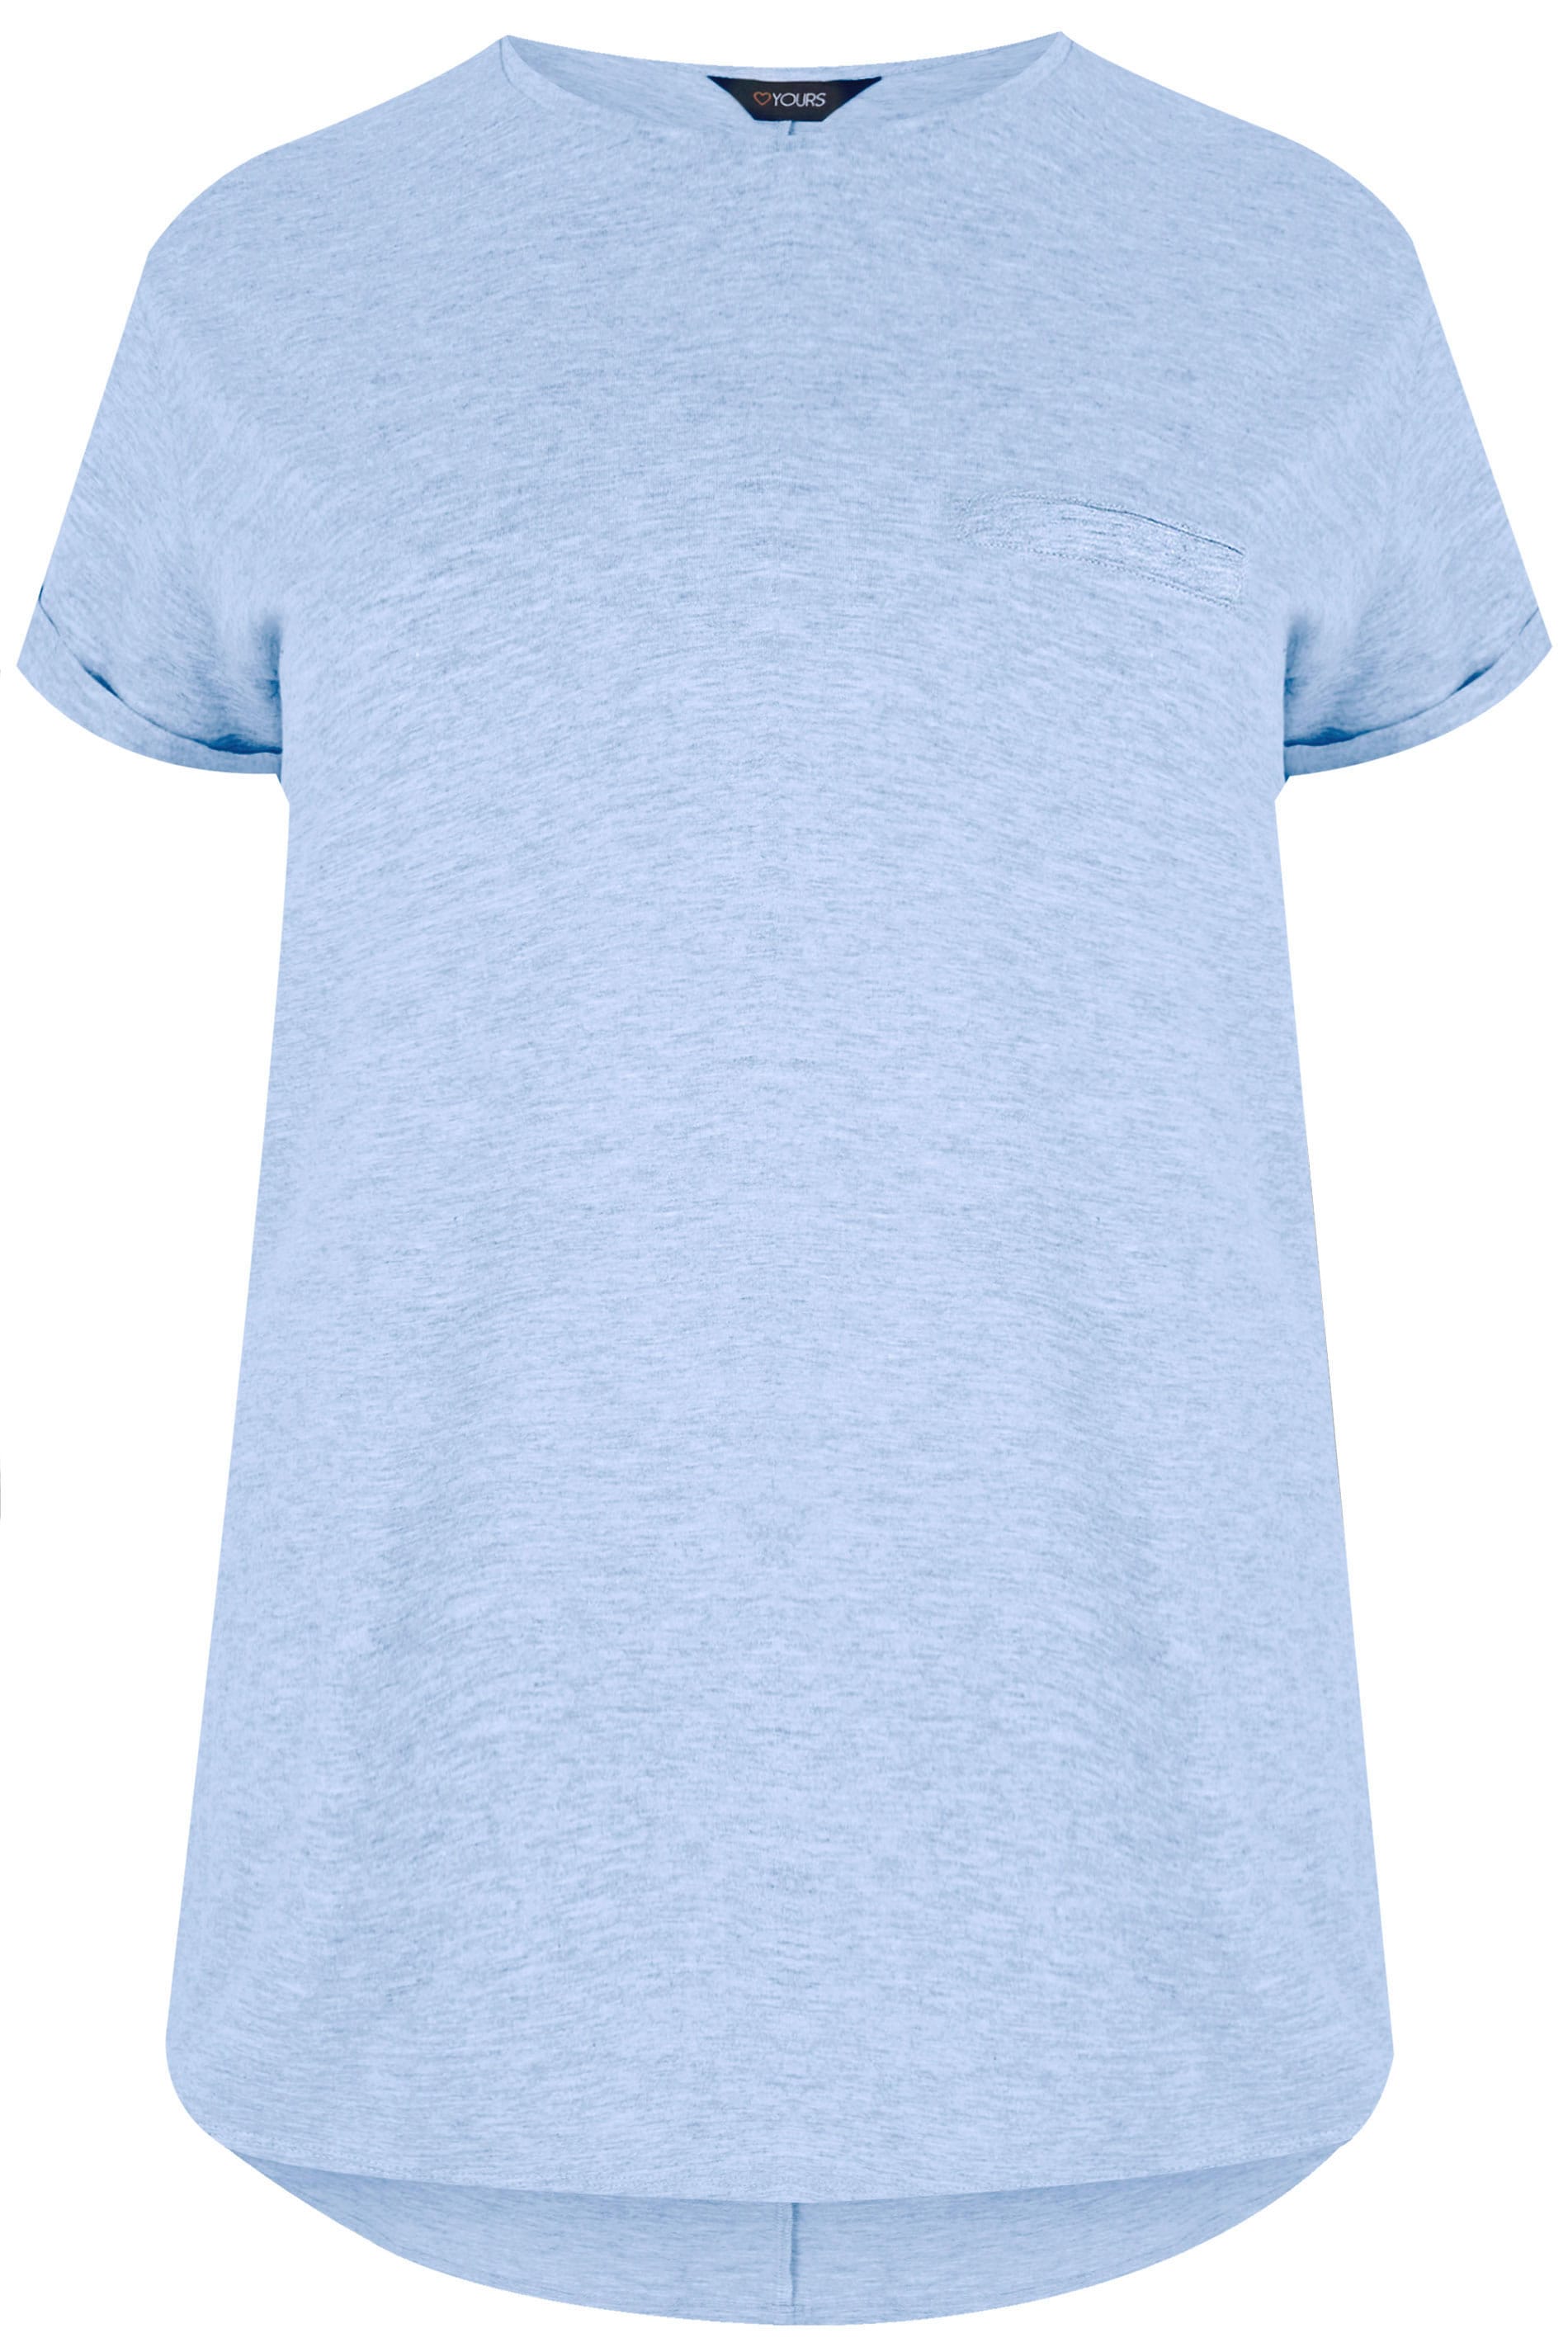 Download Plus Size Blue Marl Mock Pocket T-Shirt | Sizes 16 to 40 ...